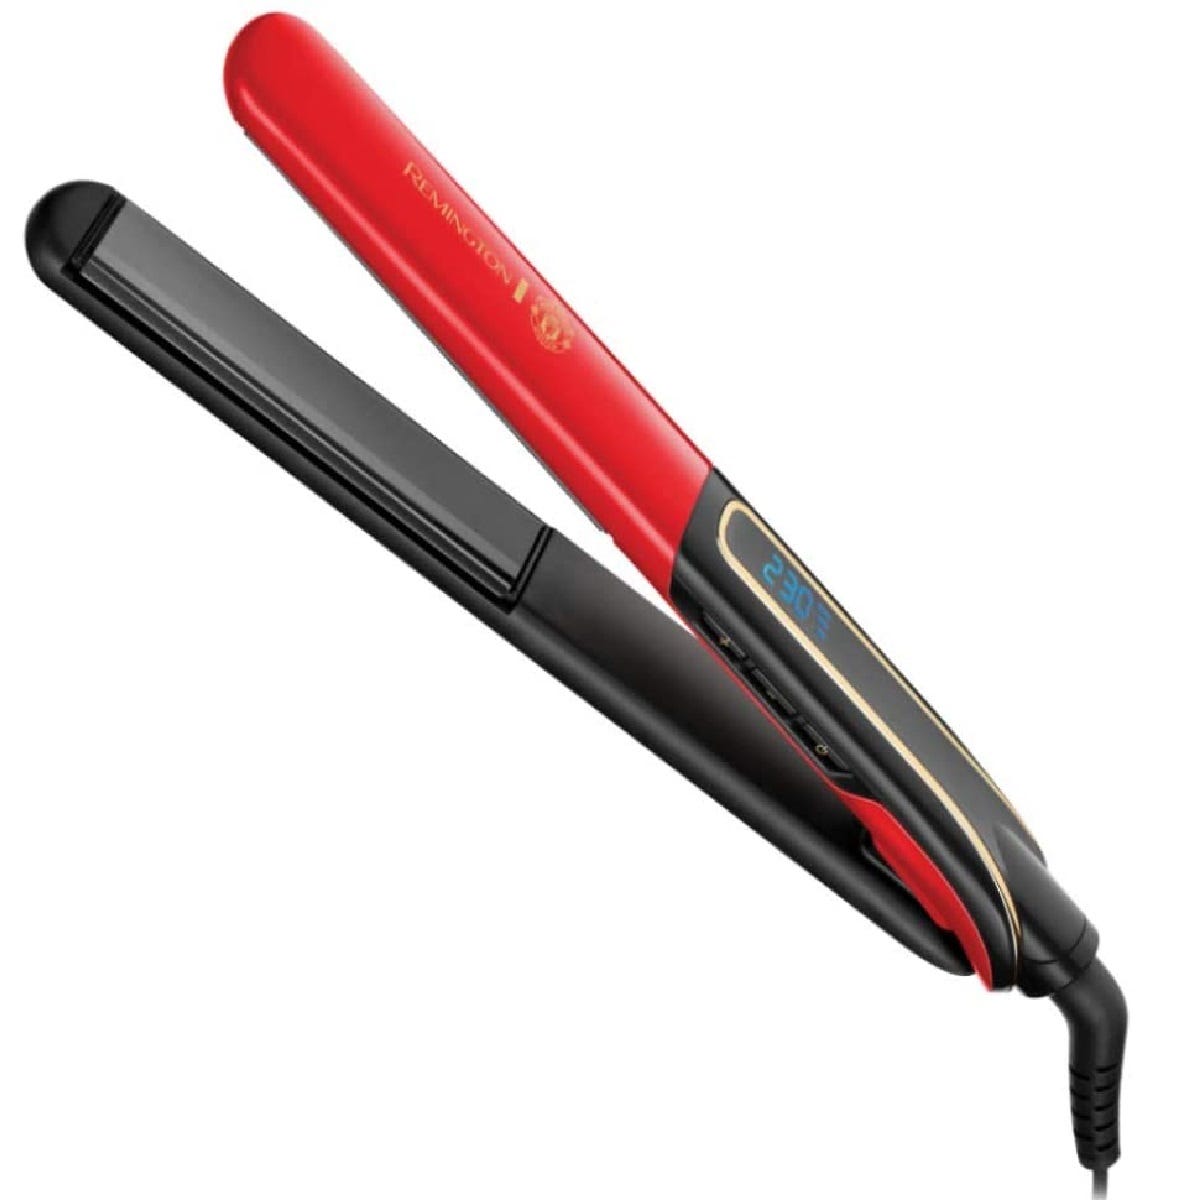 Remington S6755 Manchester United Sleek and Curl Expert Ceramic Hair Straightener - Black/Red